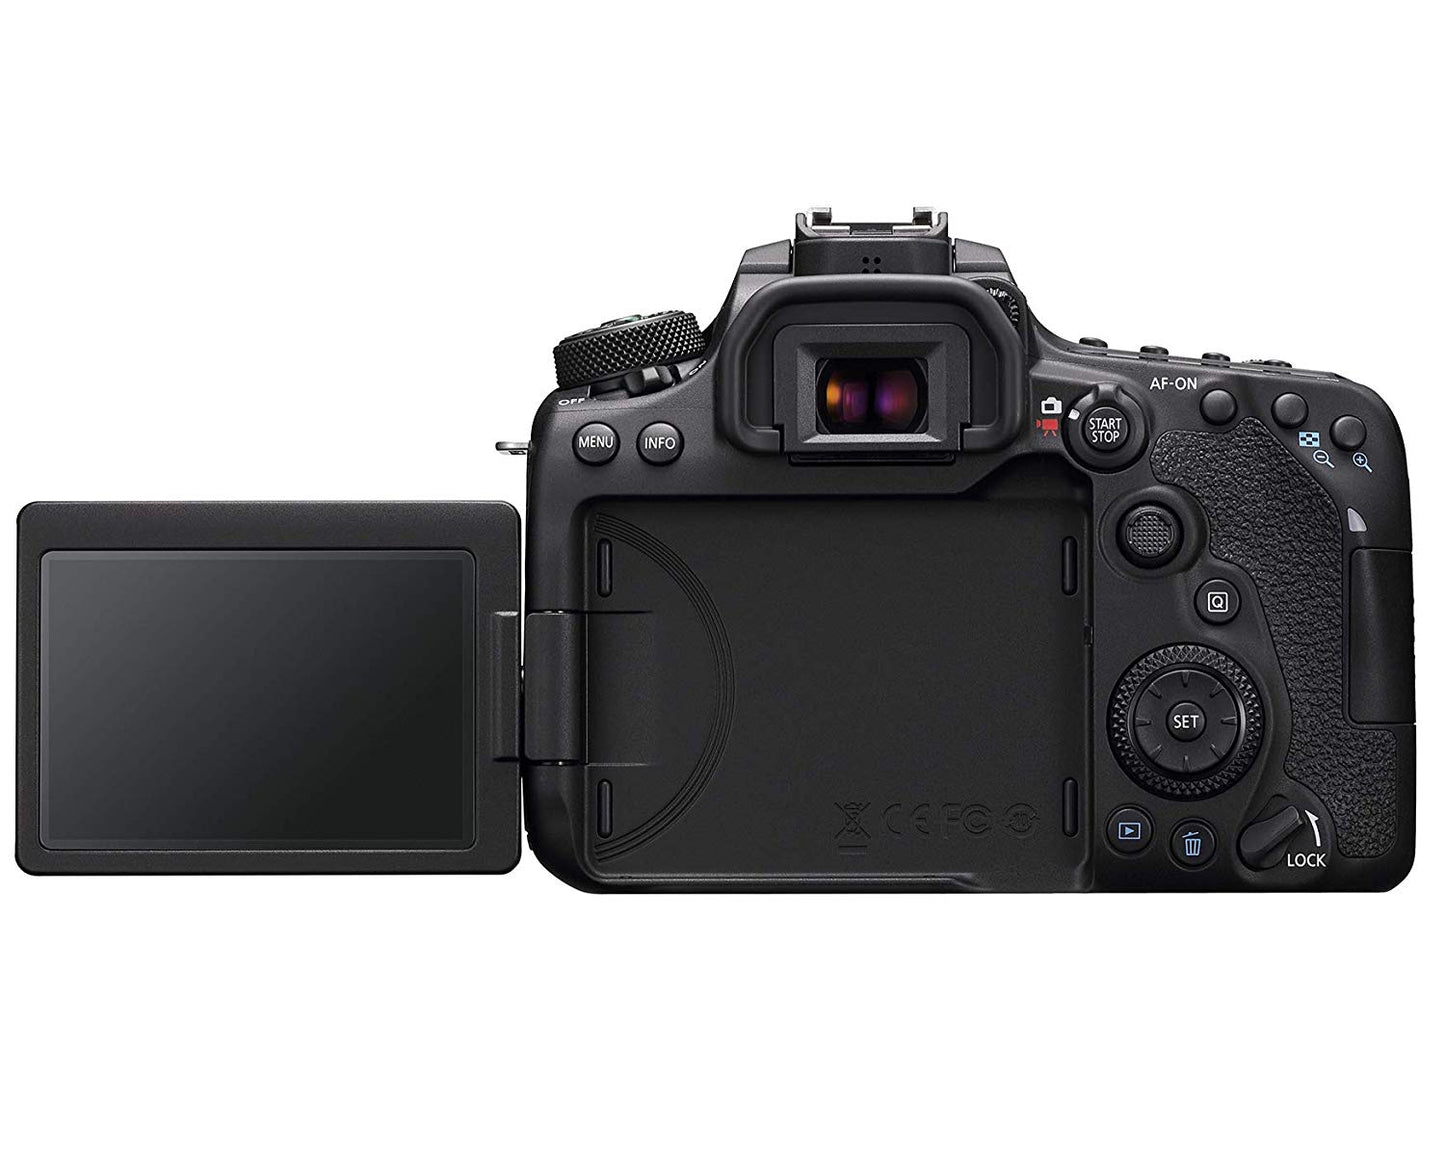 Canon 90D Digital SLR Camera - Body Only